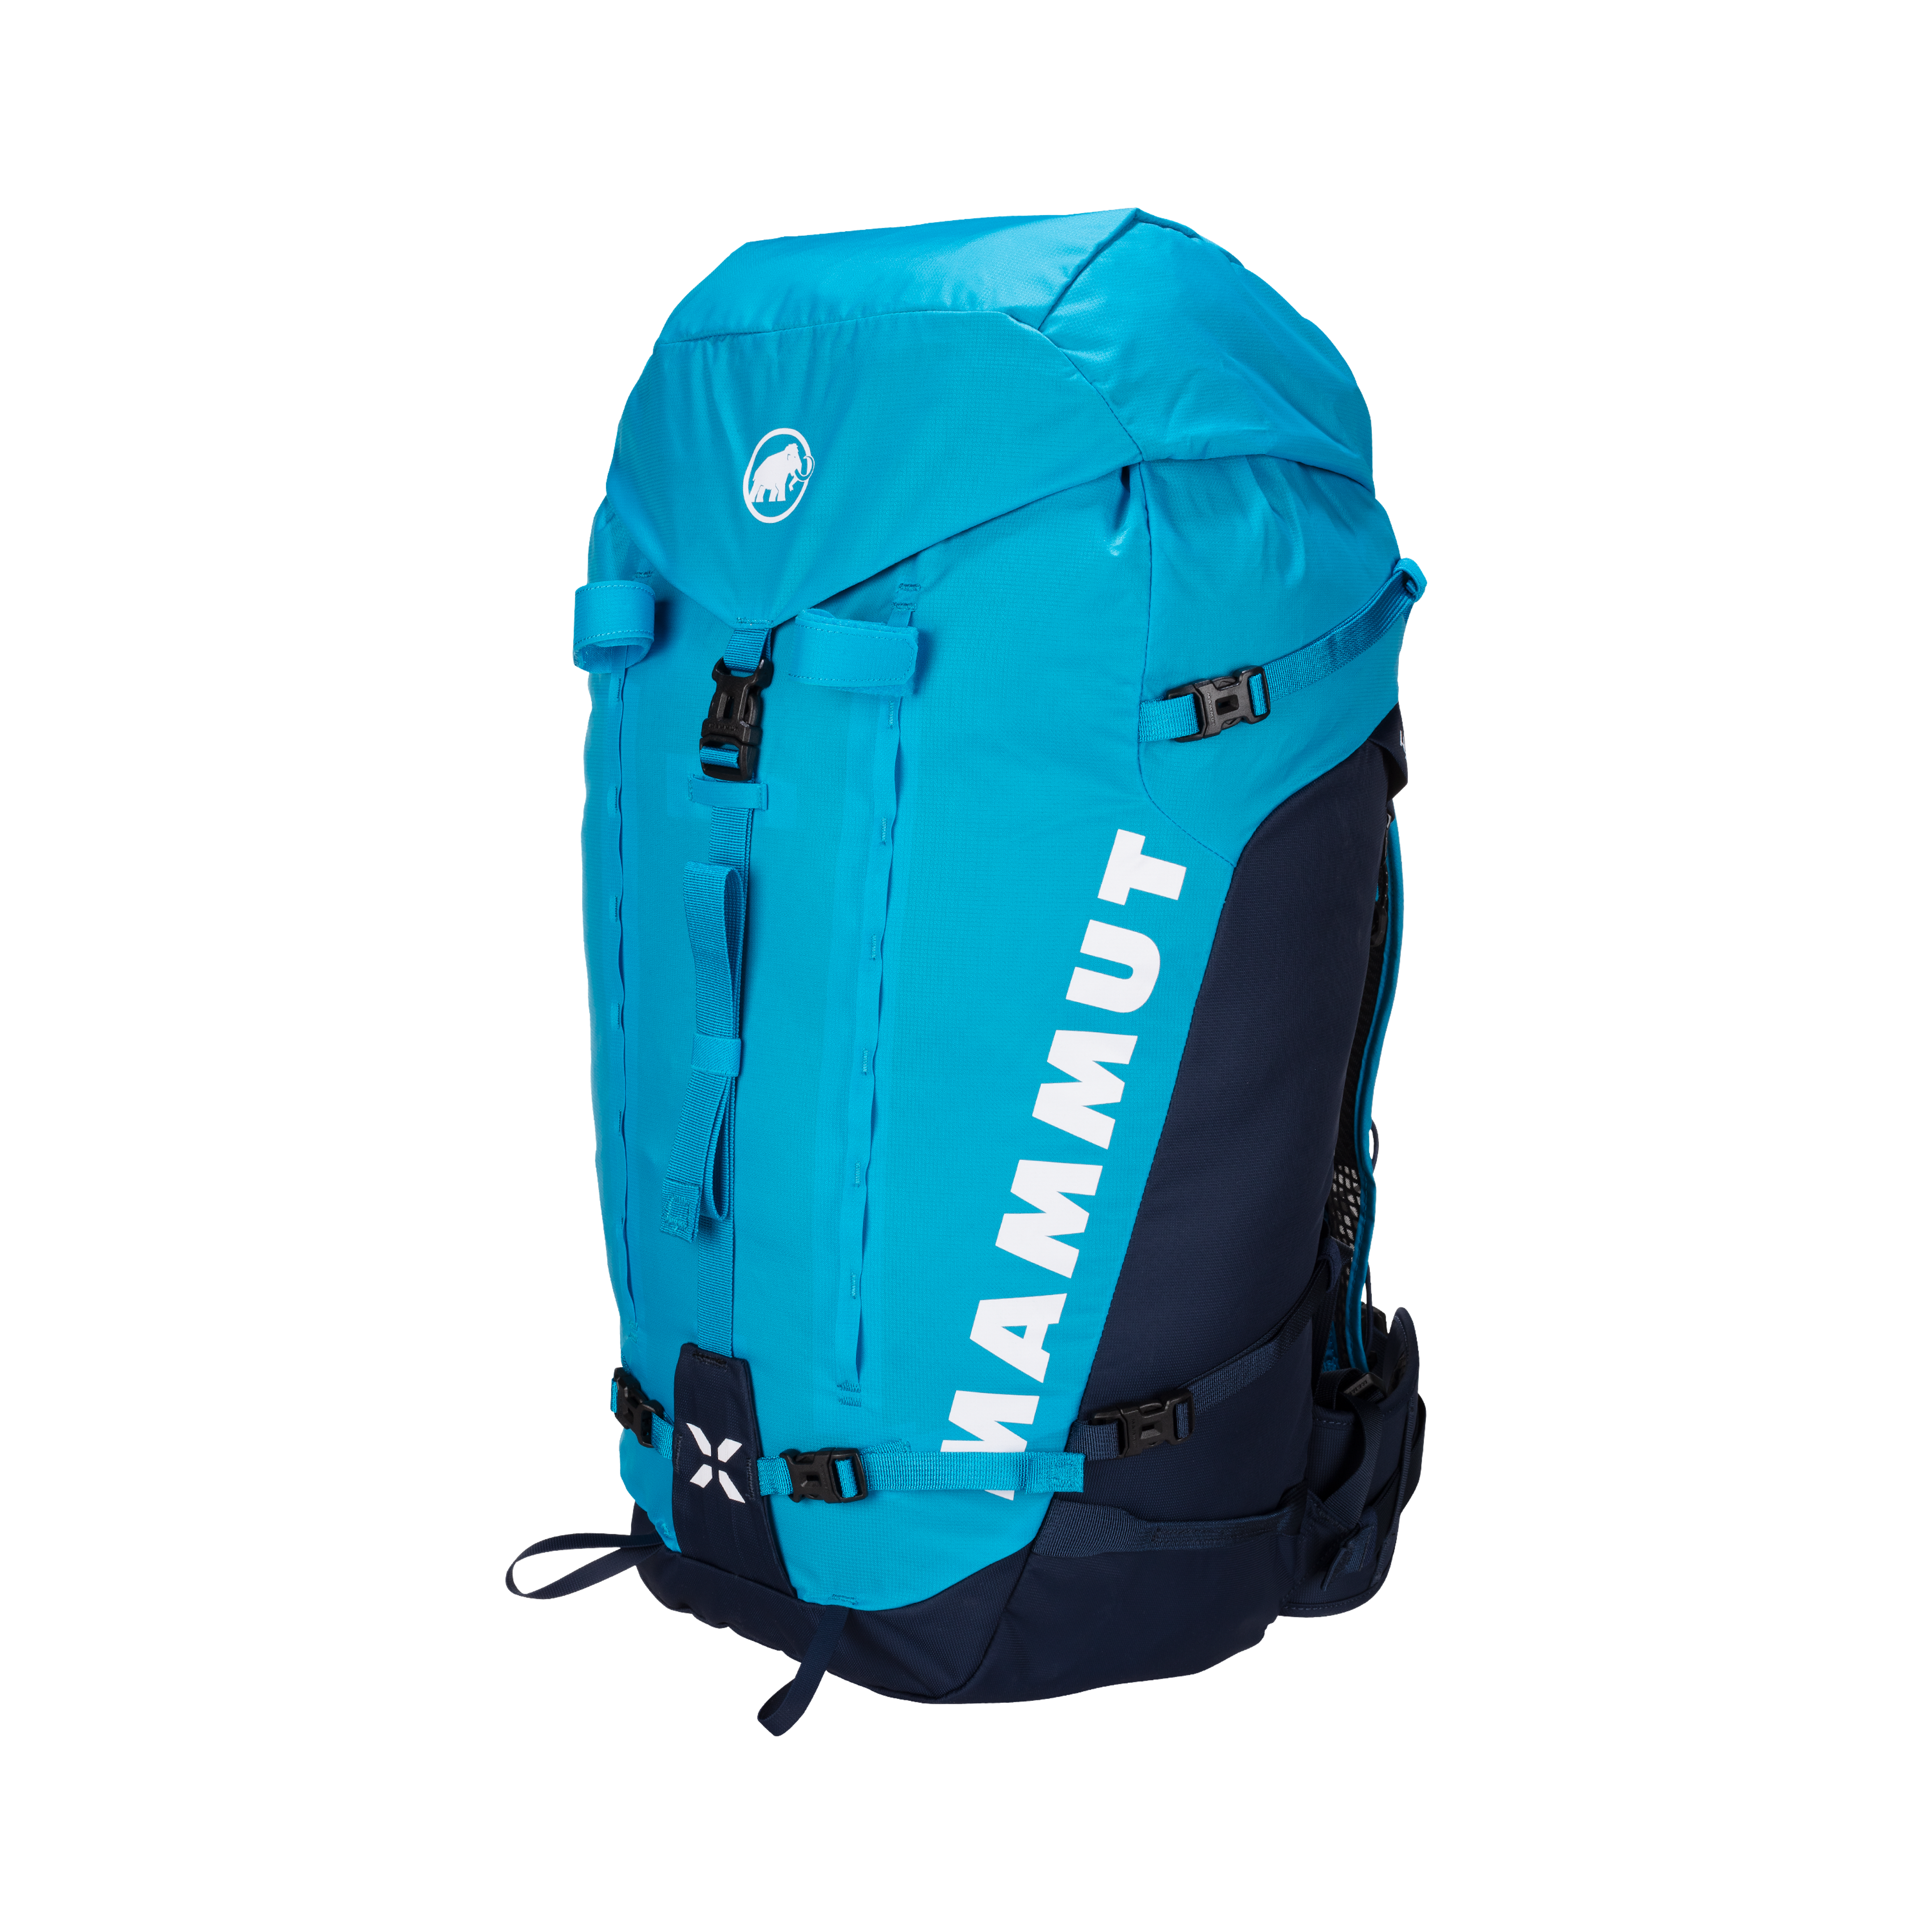 Mammut backpack in blue